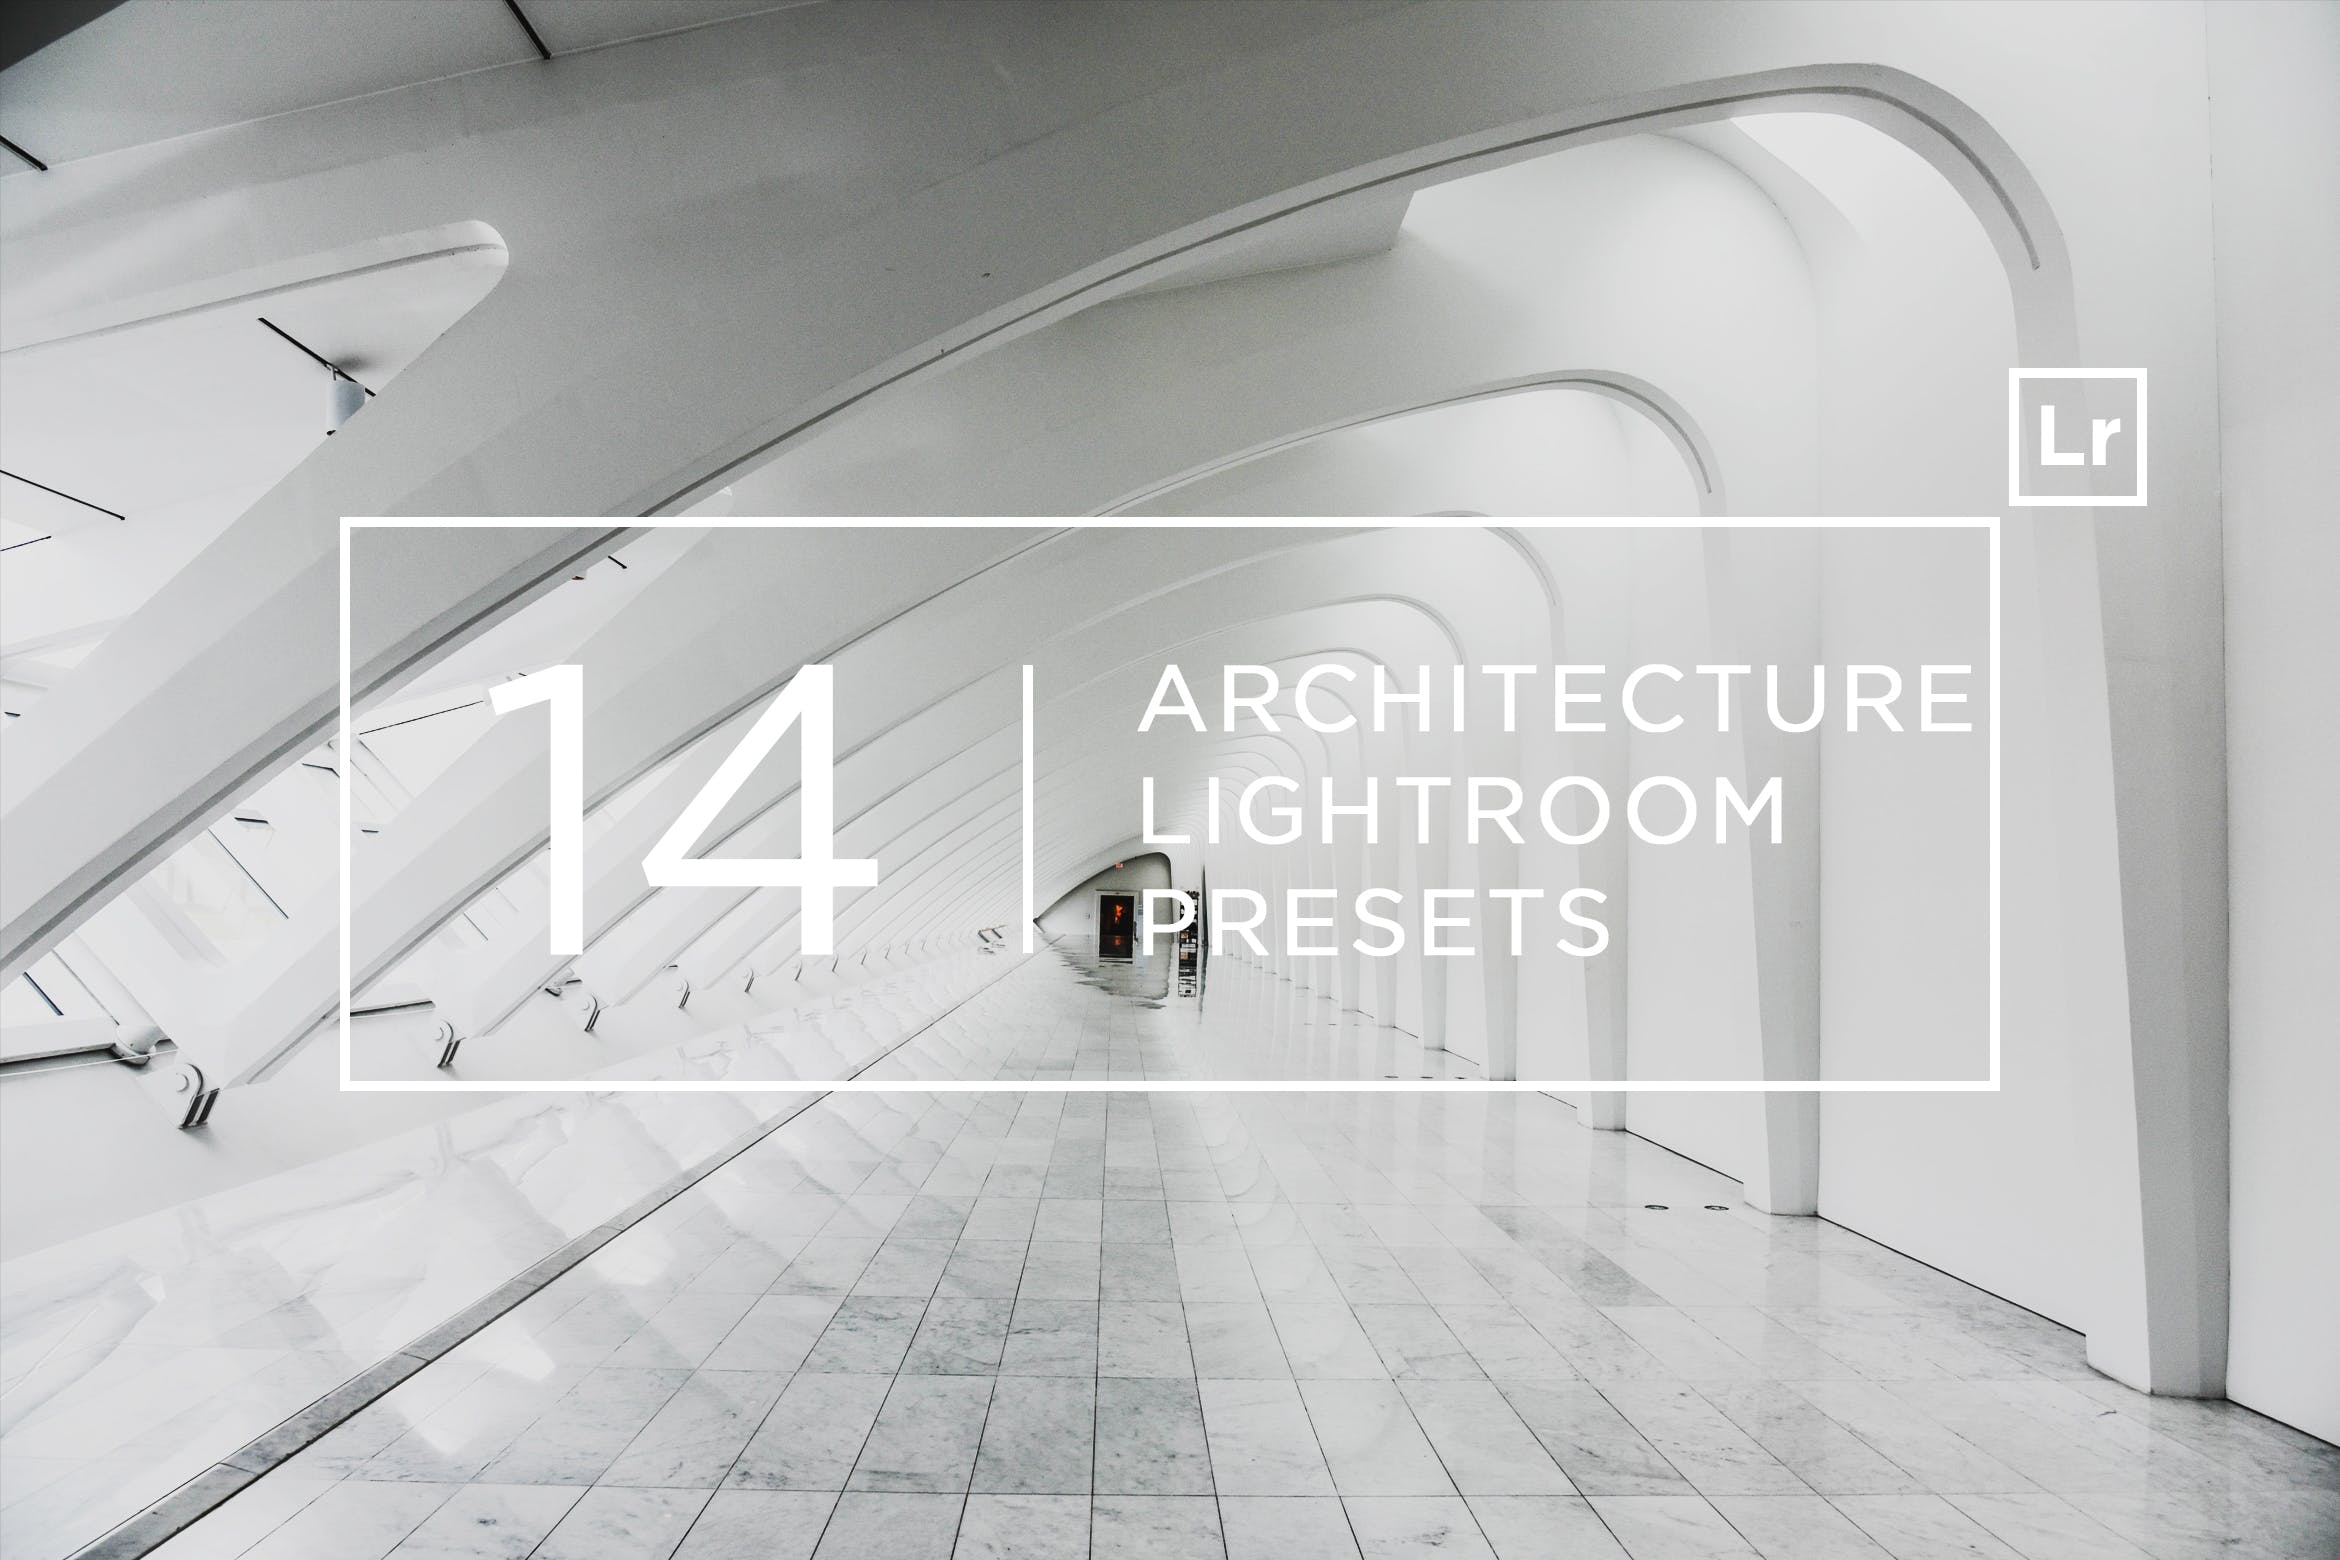 14款专业建筑摄影Lightroom调色预设 14 Pro Architecture Lightroom Presets插图